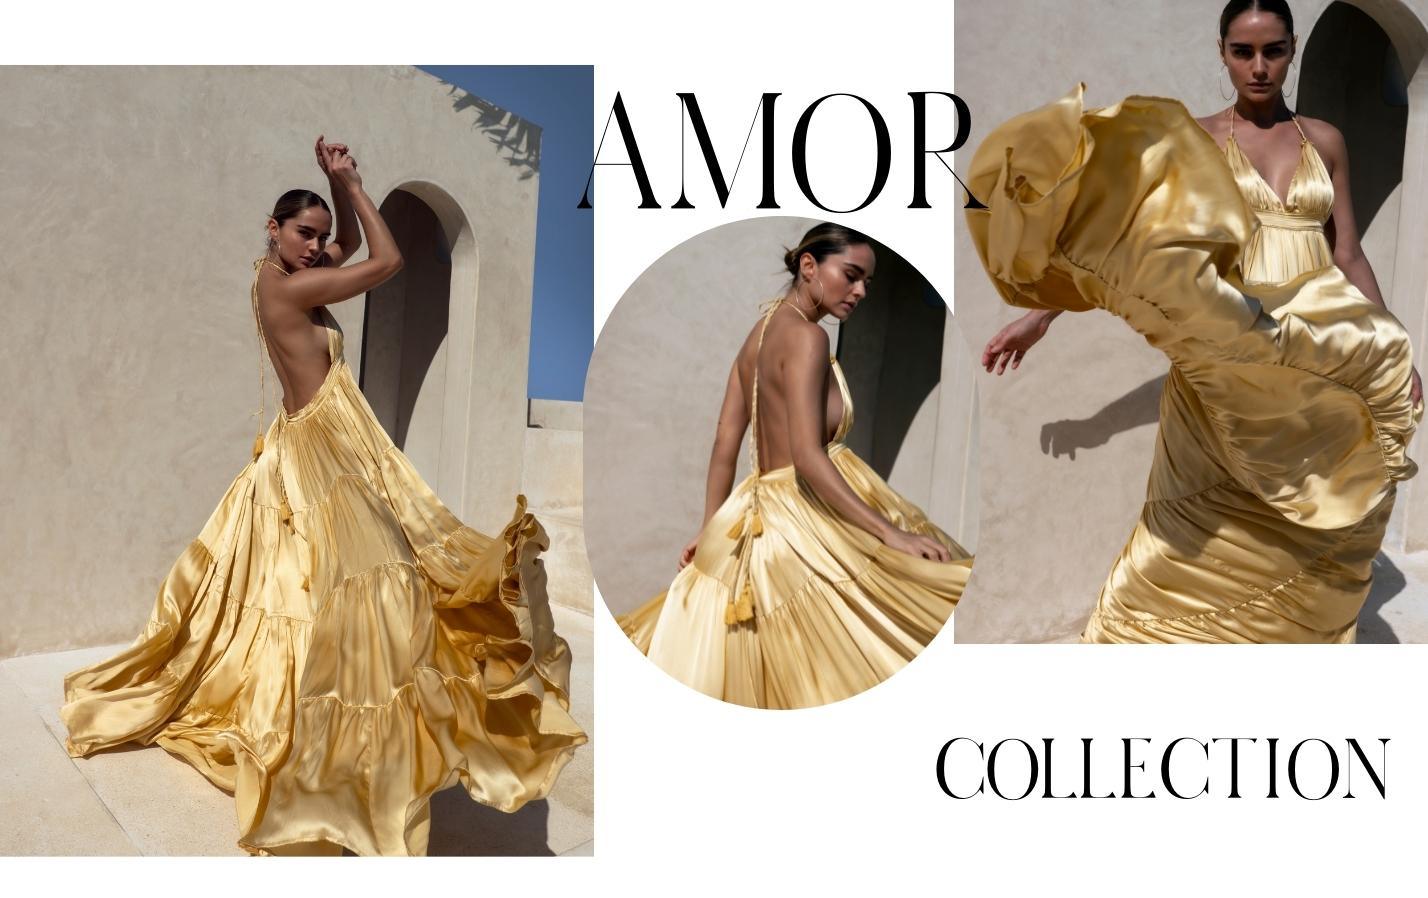 Amor Collection 02 - Erika Peña